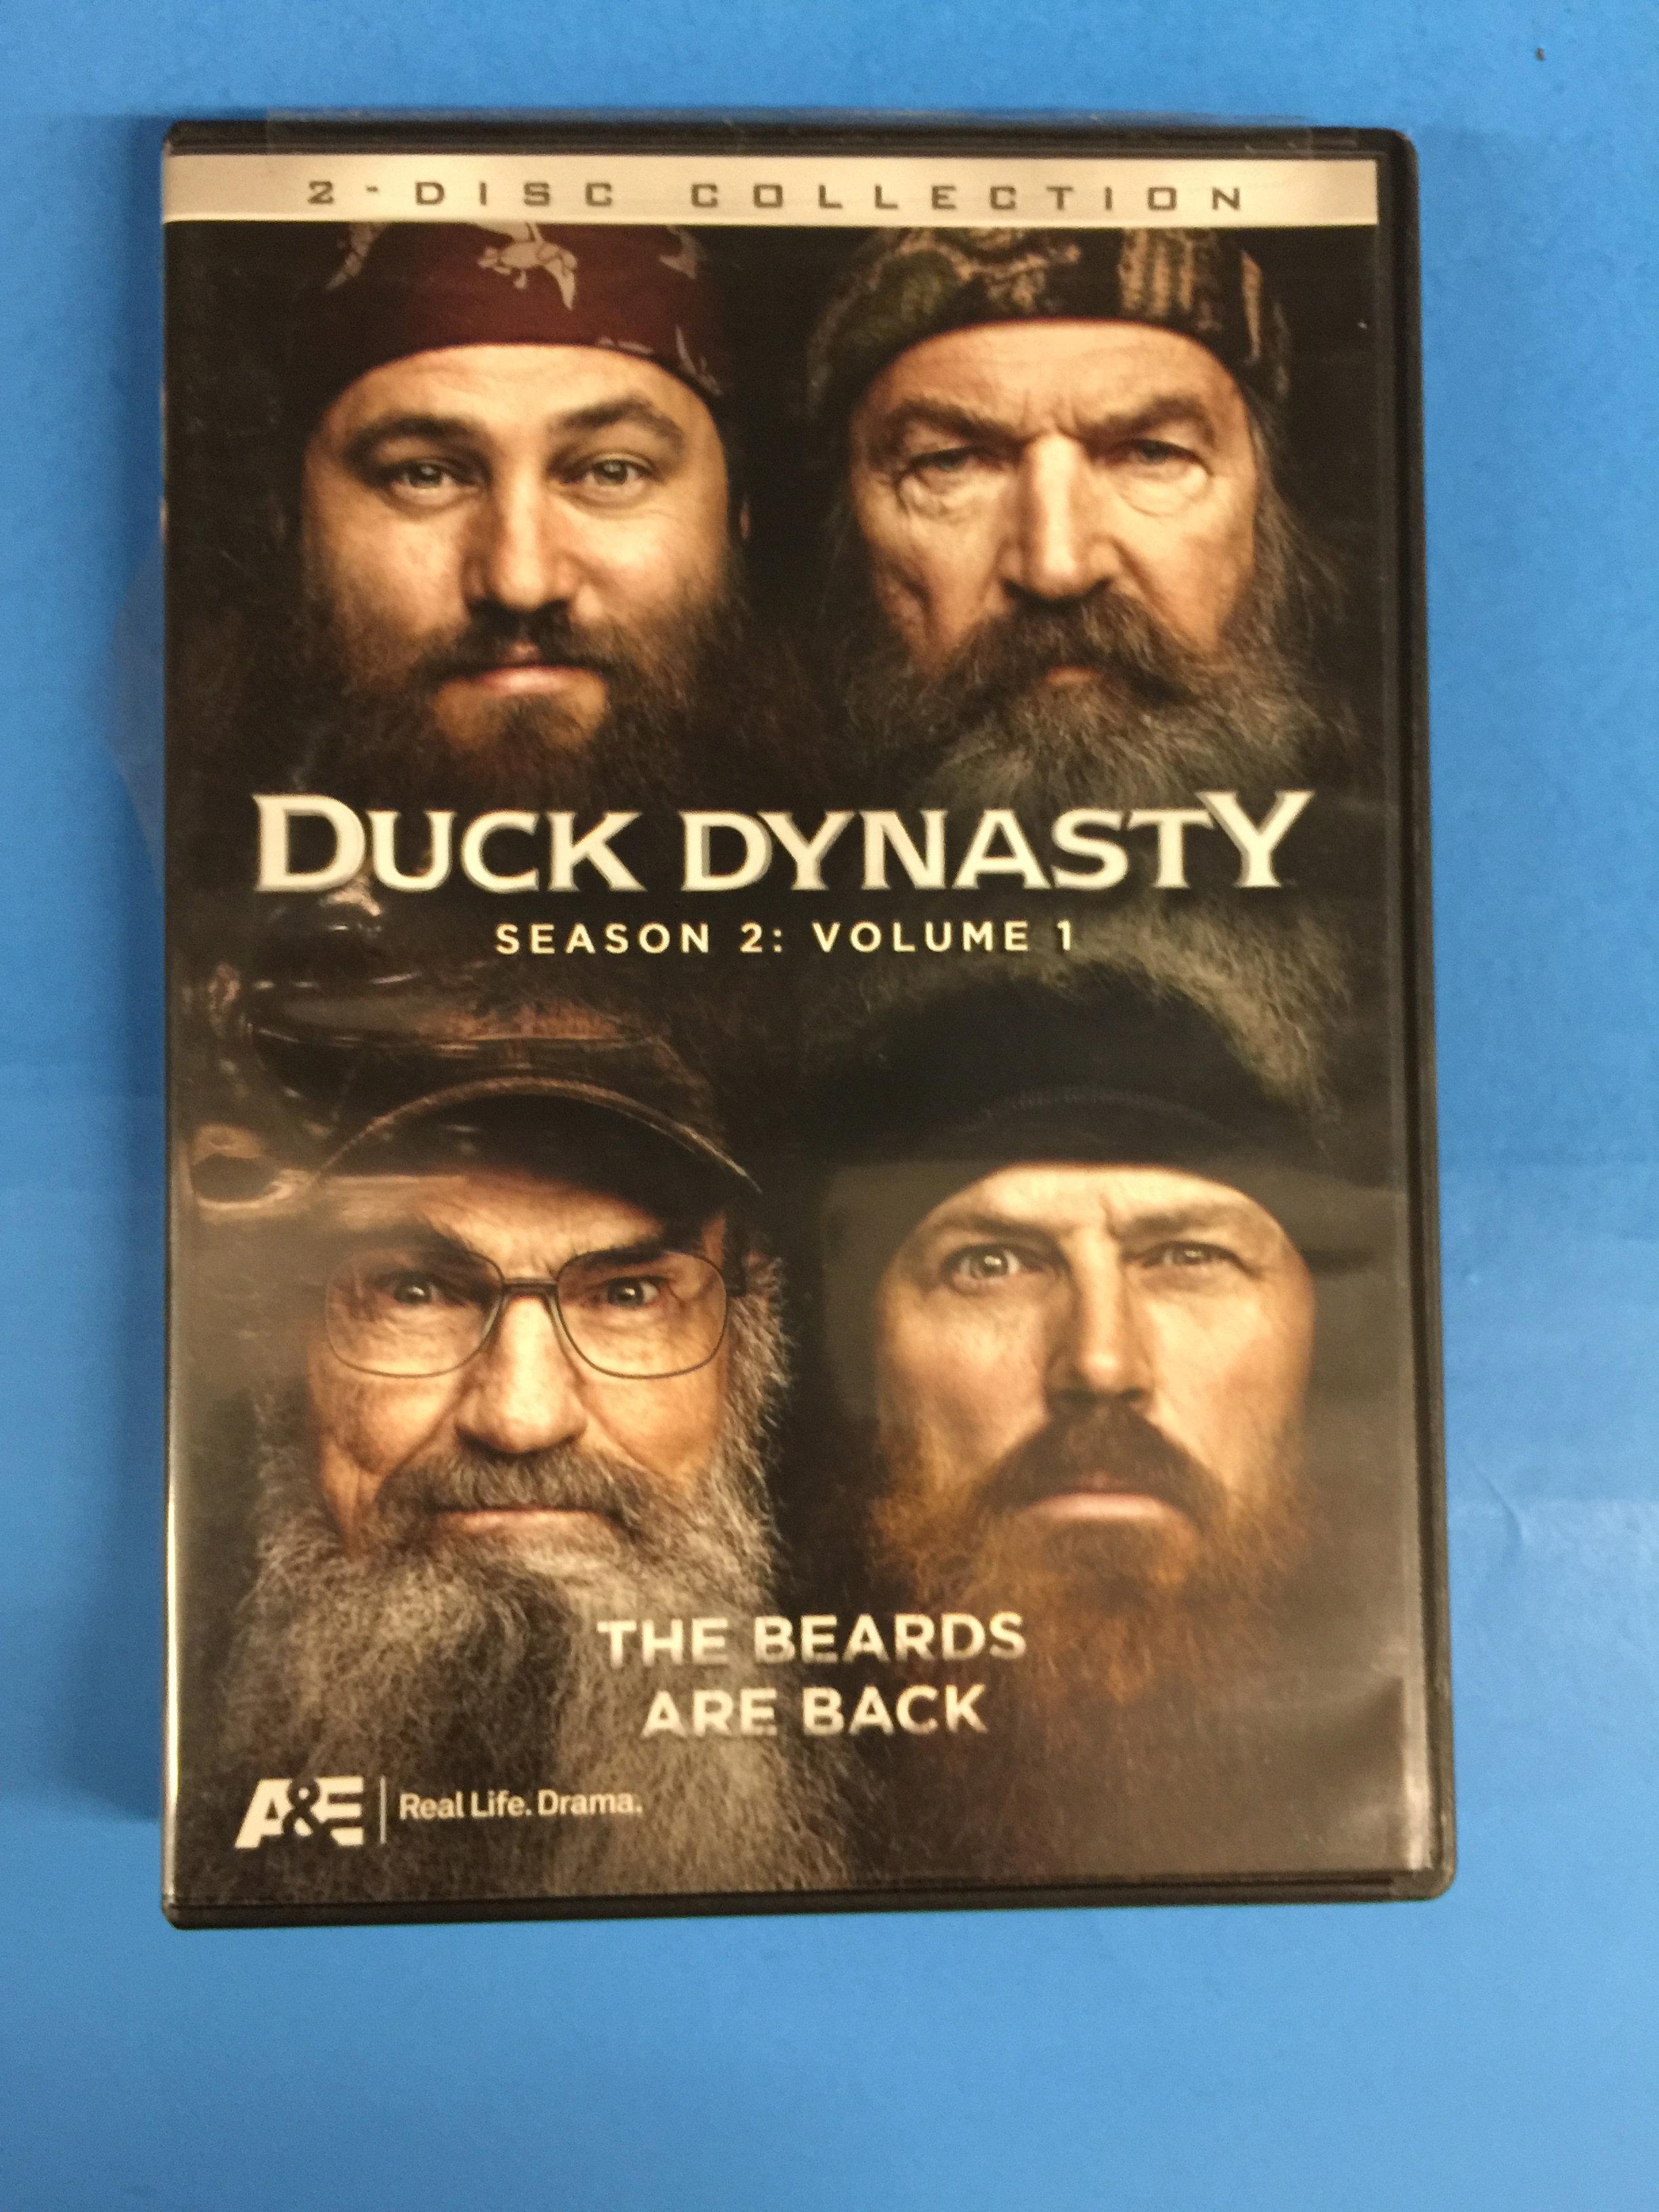 Duck Dynasty Season 2 Volume 1 2-Disc Collection DVD